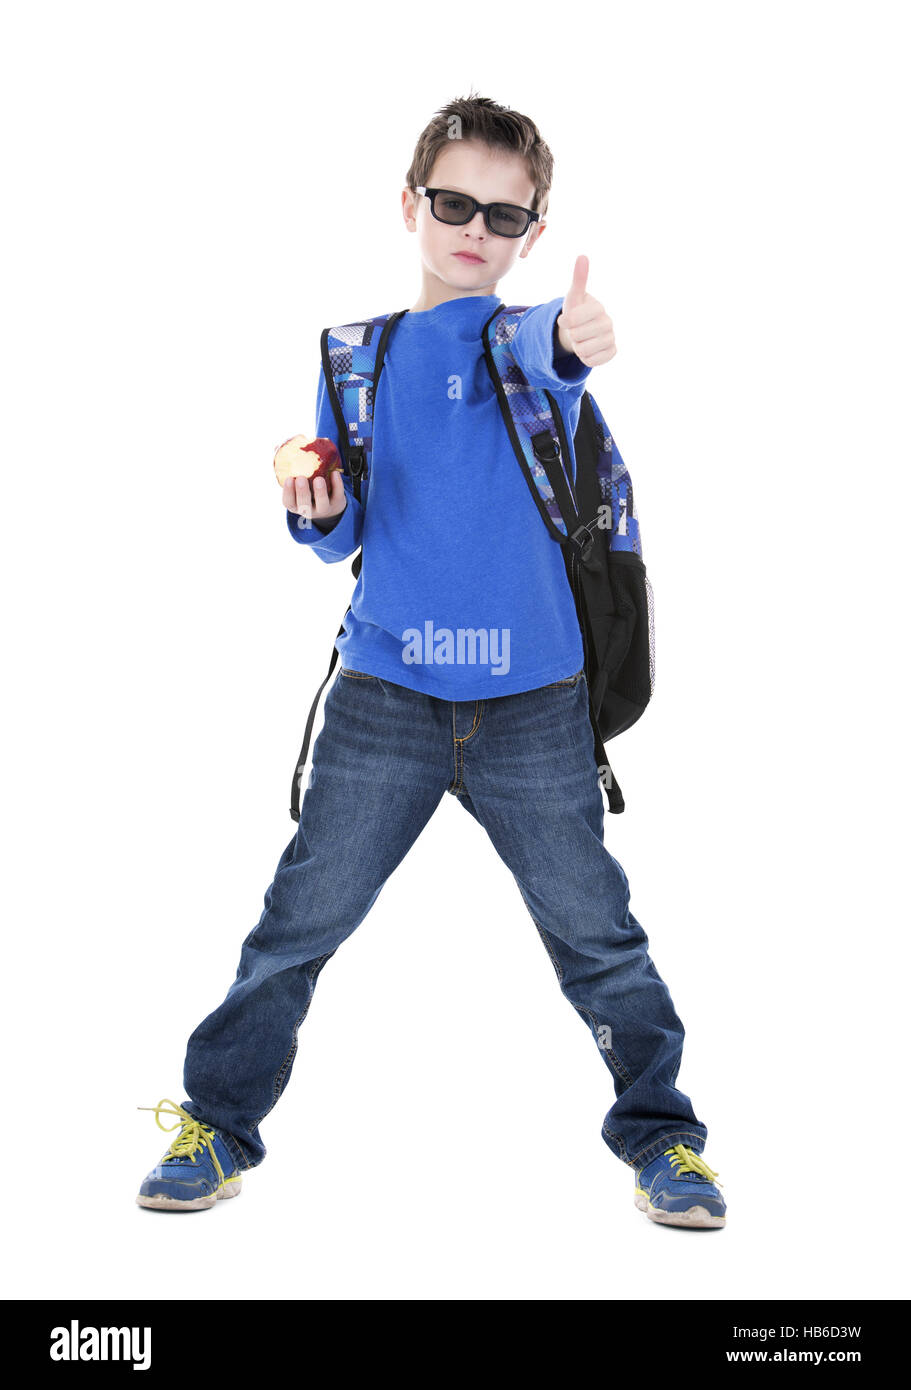 boy wearing back pack Stock Photo